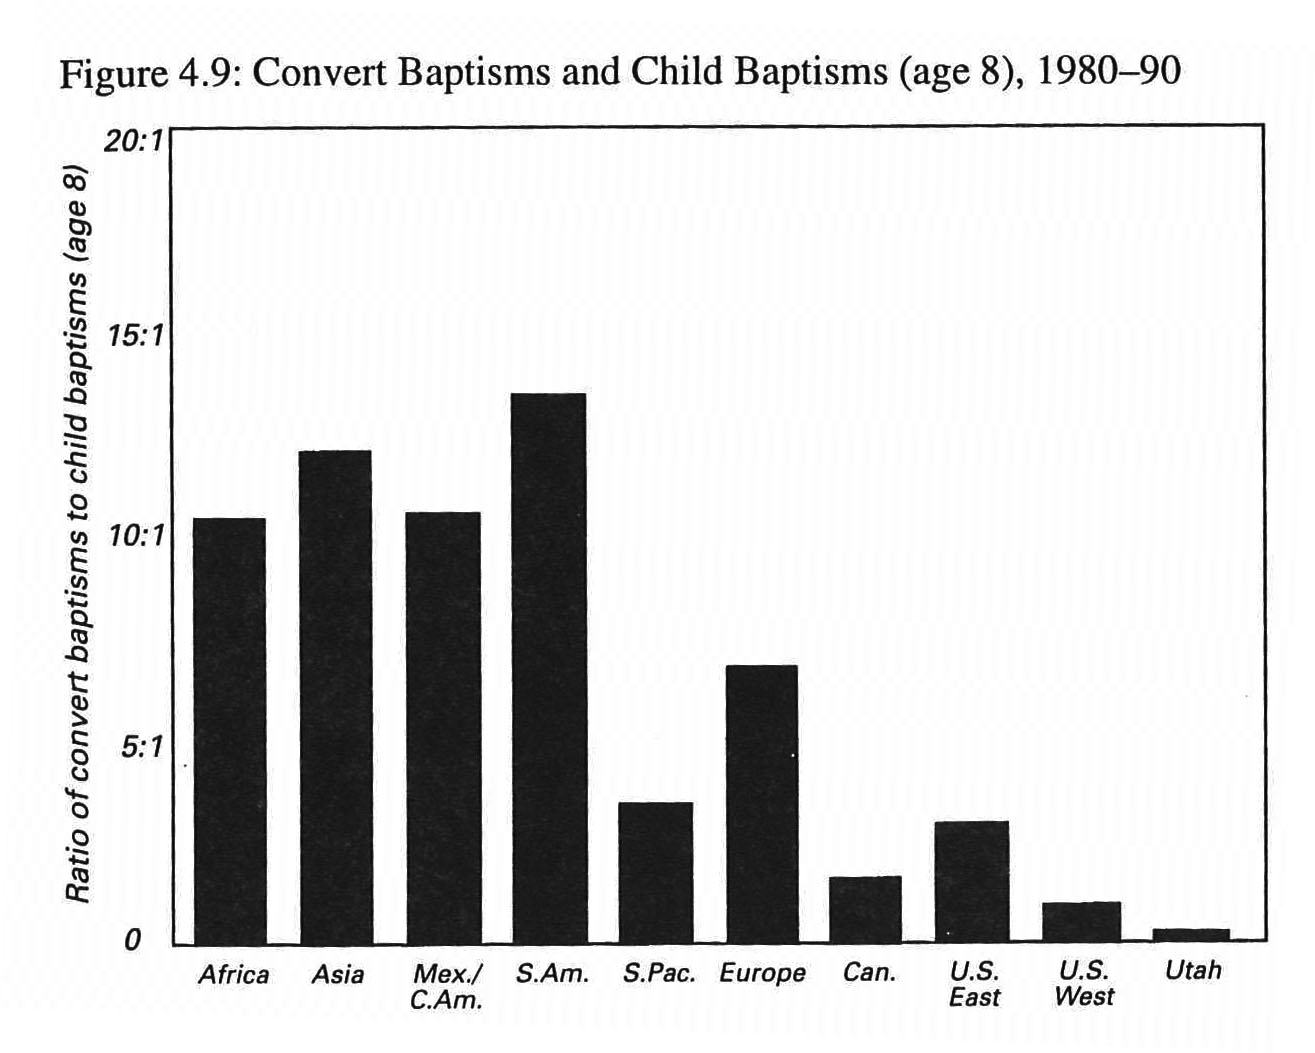 Convert Baptisms and Child Baptisms (age 8), 1980-1990